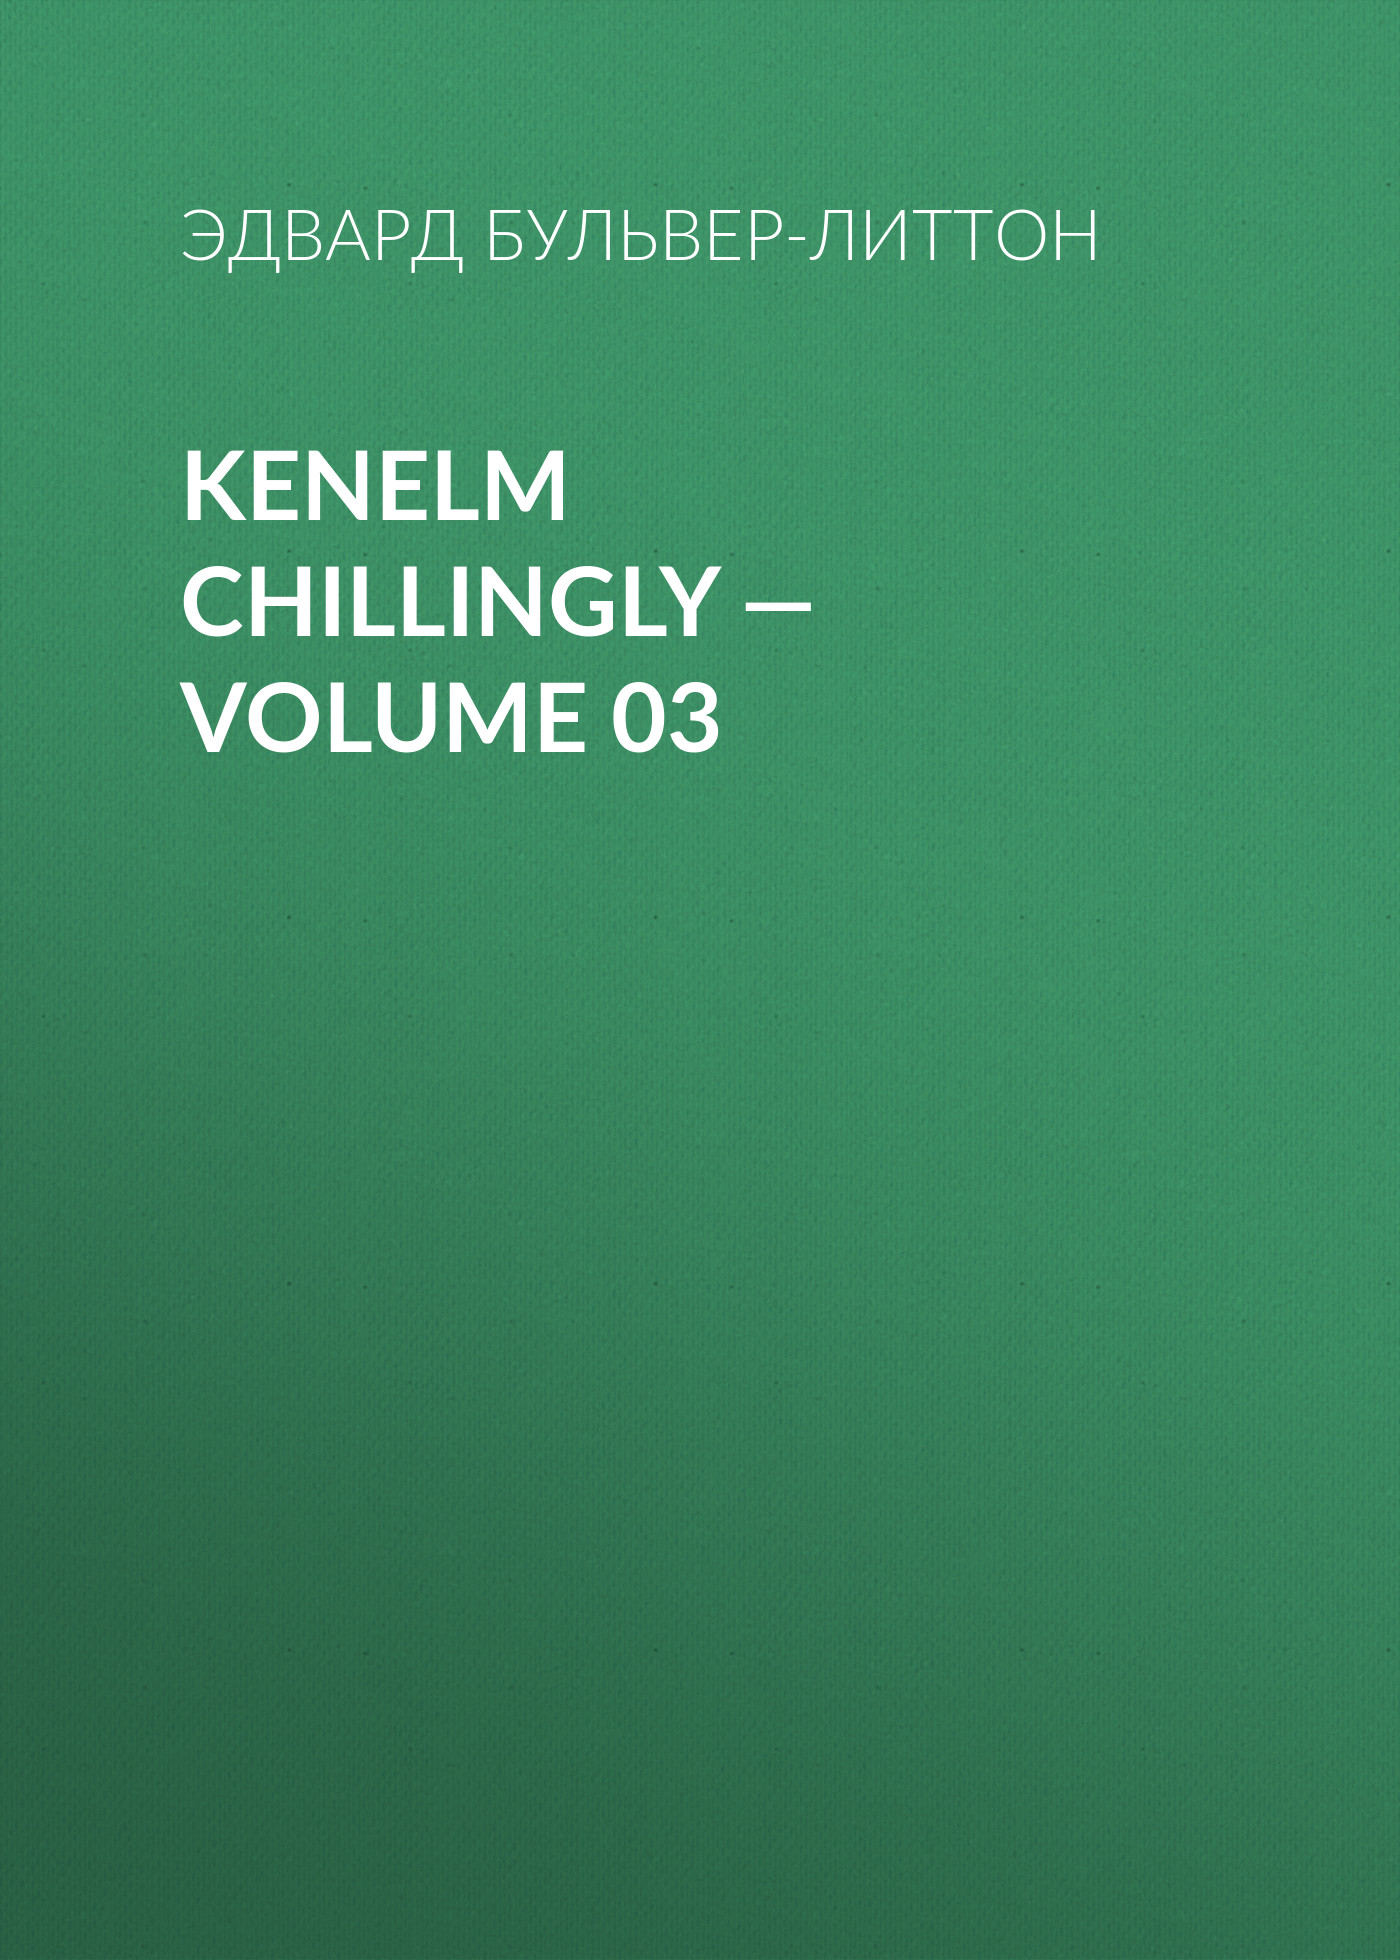 Kenelm Chillingly— Volume 03